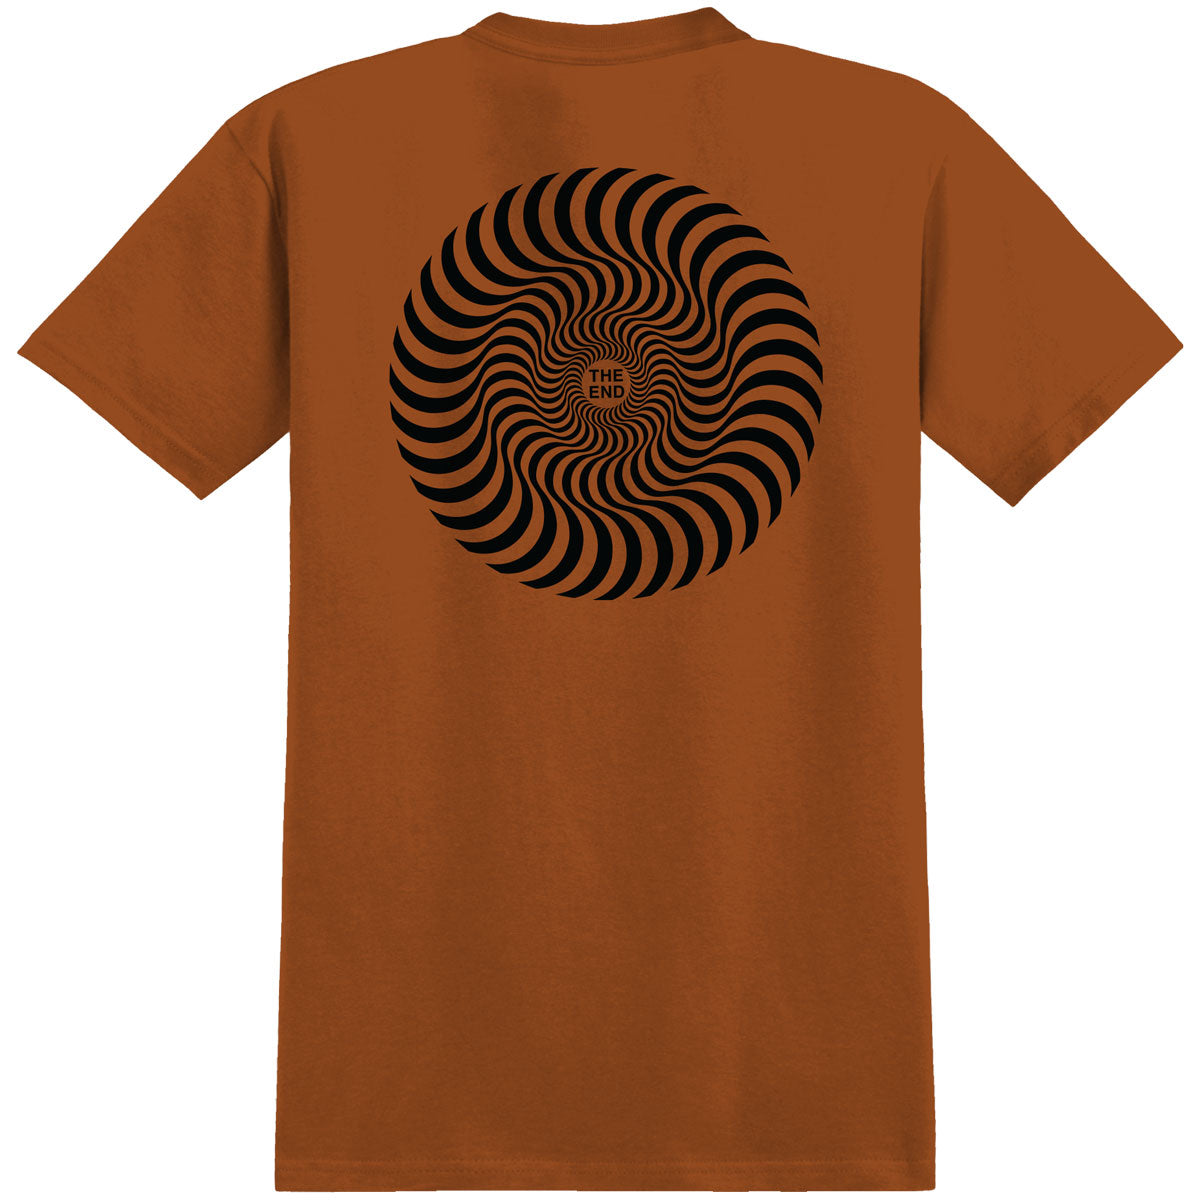 Spitfire Classic Swirl T-Shirt - Orange/Black/Orange image 1